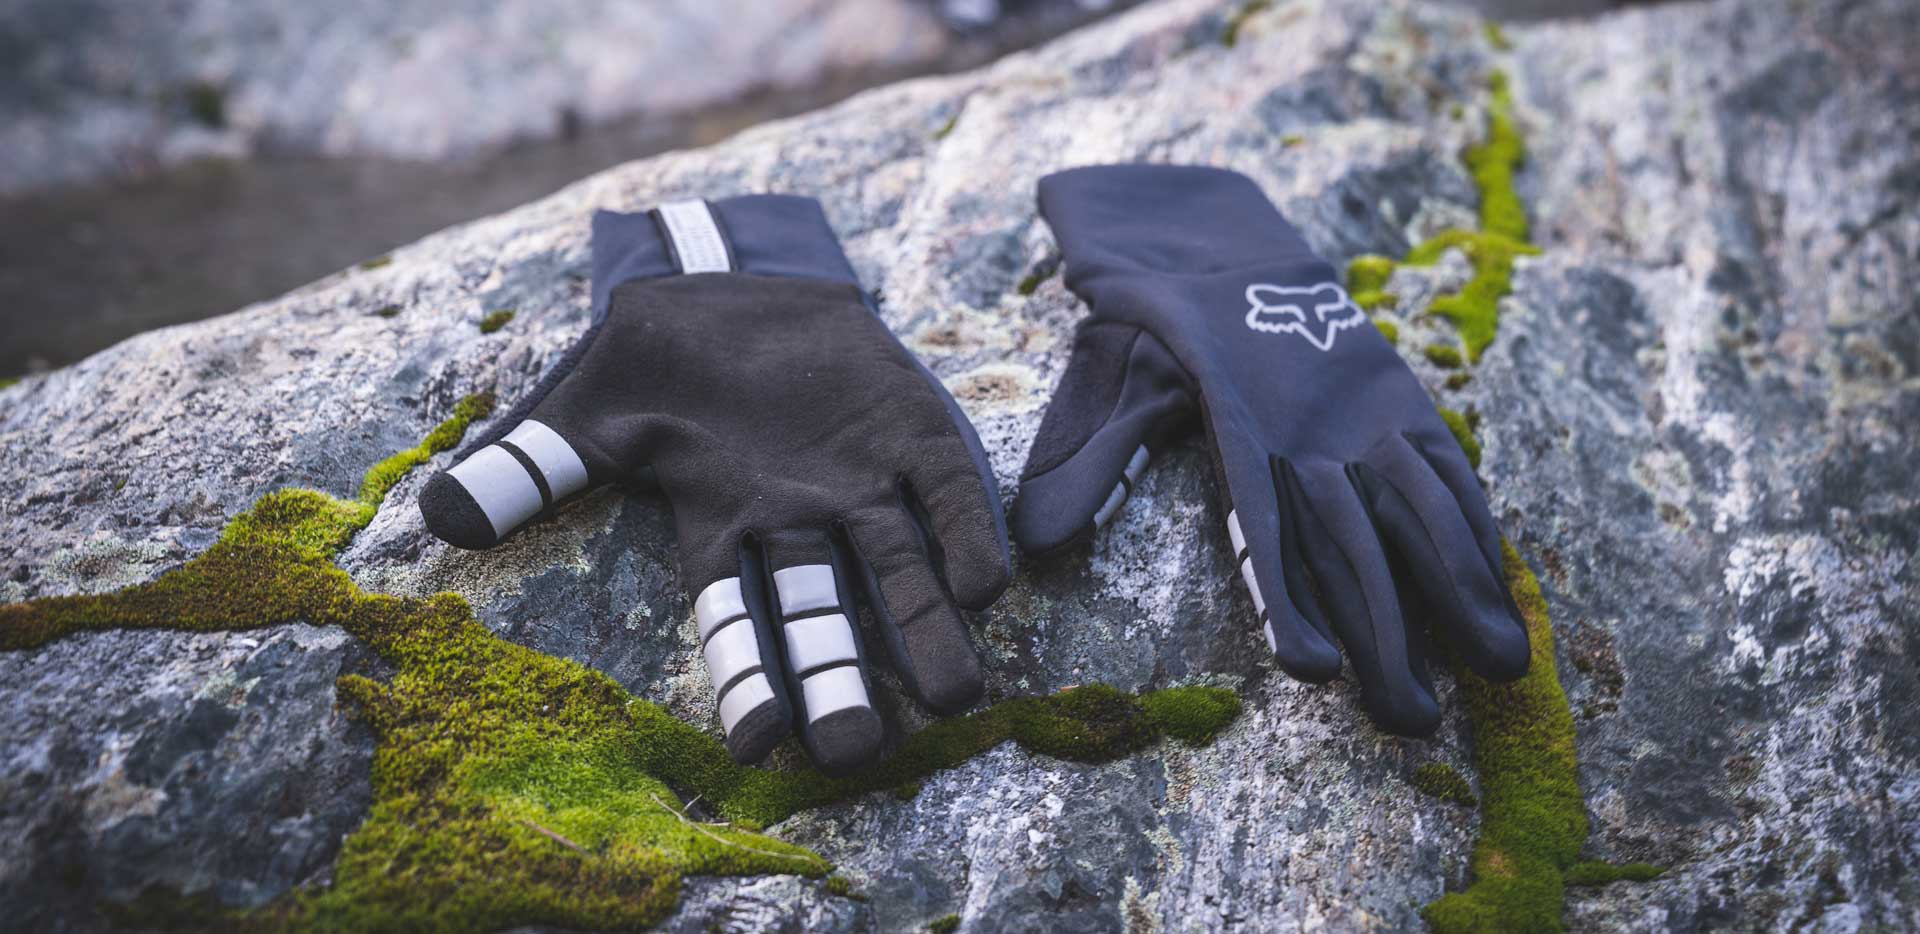 Fox Ranger Fire Review Winter mountain bike glove review look